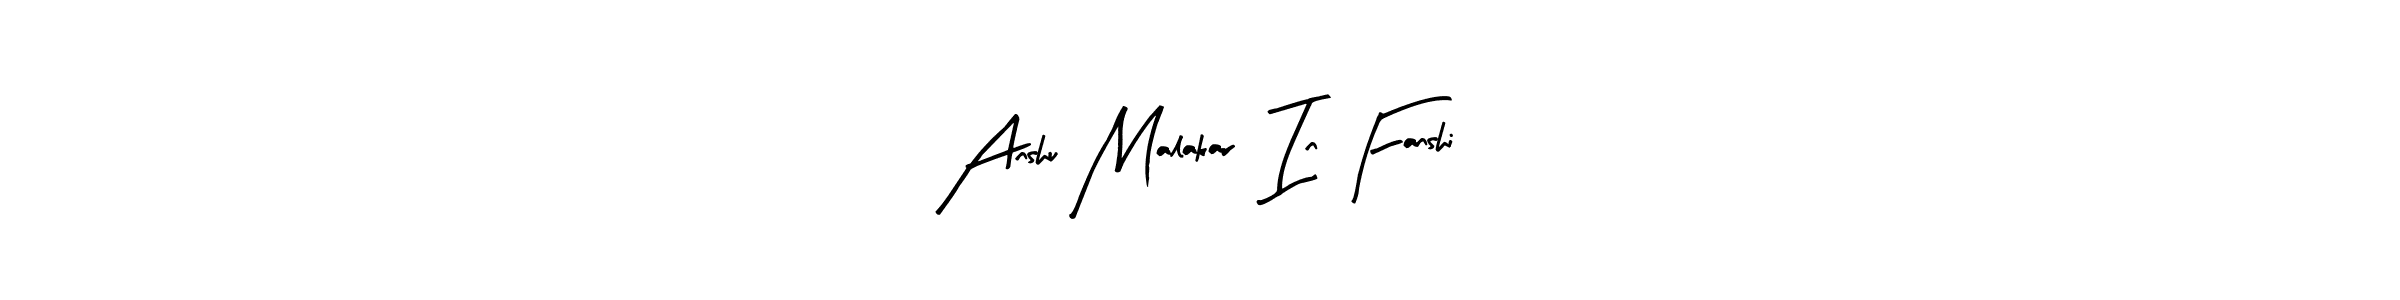 Anshu Malakar  In Fanshi stylish signature style. Best Handwritten Sign (Arty Signature) for my name. Handwritten Signature Collection Ideas for my name Anshu Malakar  In Fanshi. Anshu Malakar  In Fanshi signature style 8 images and pictures png